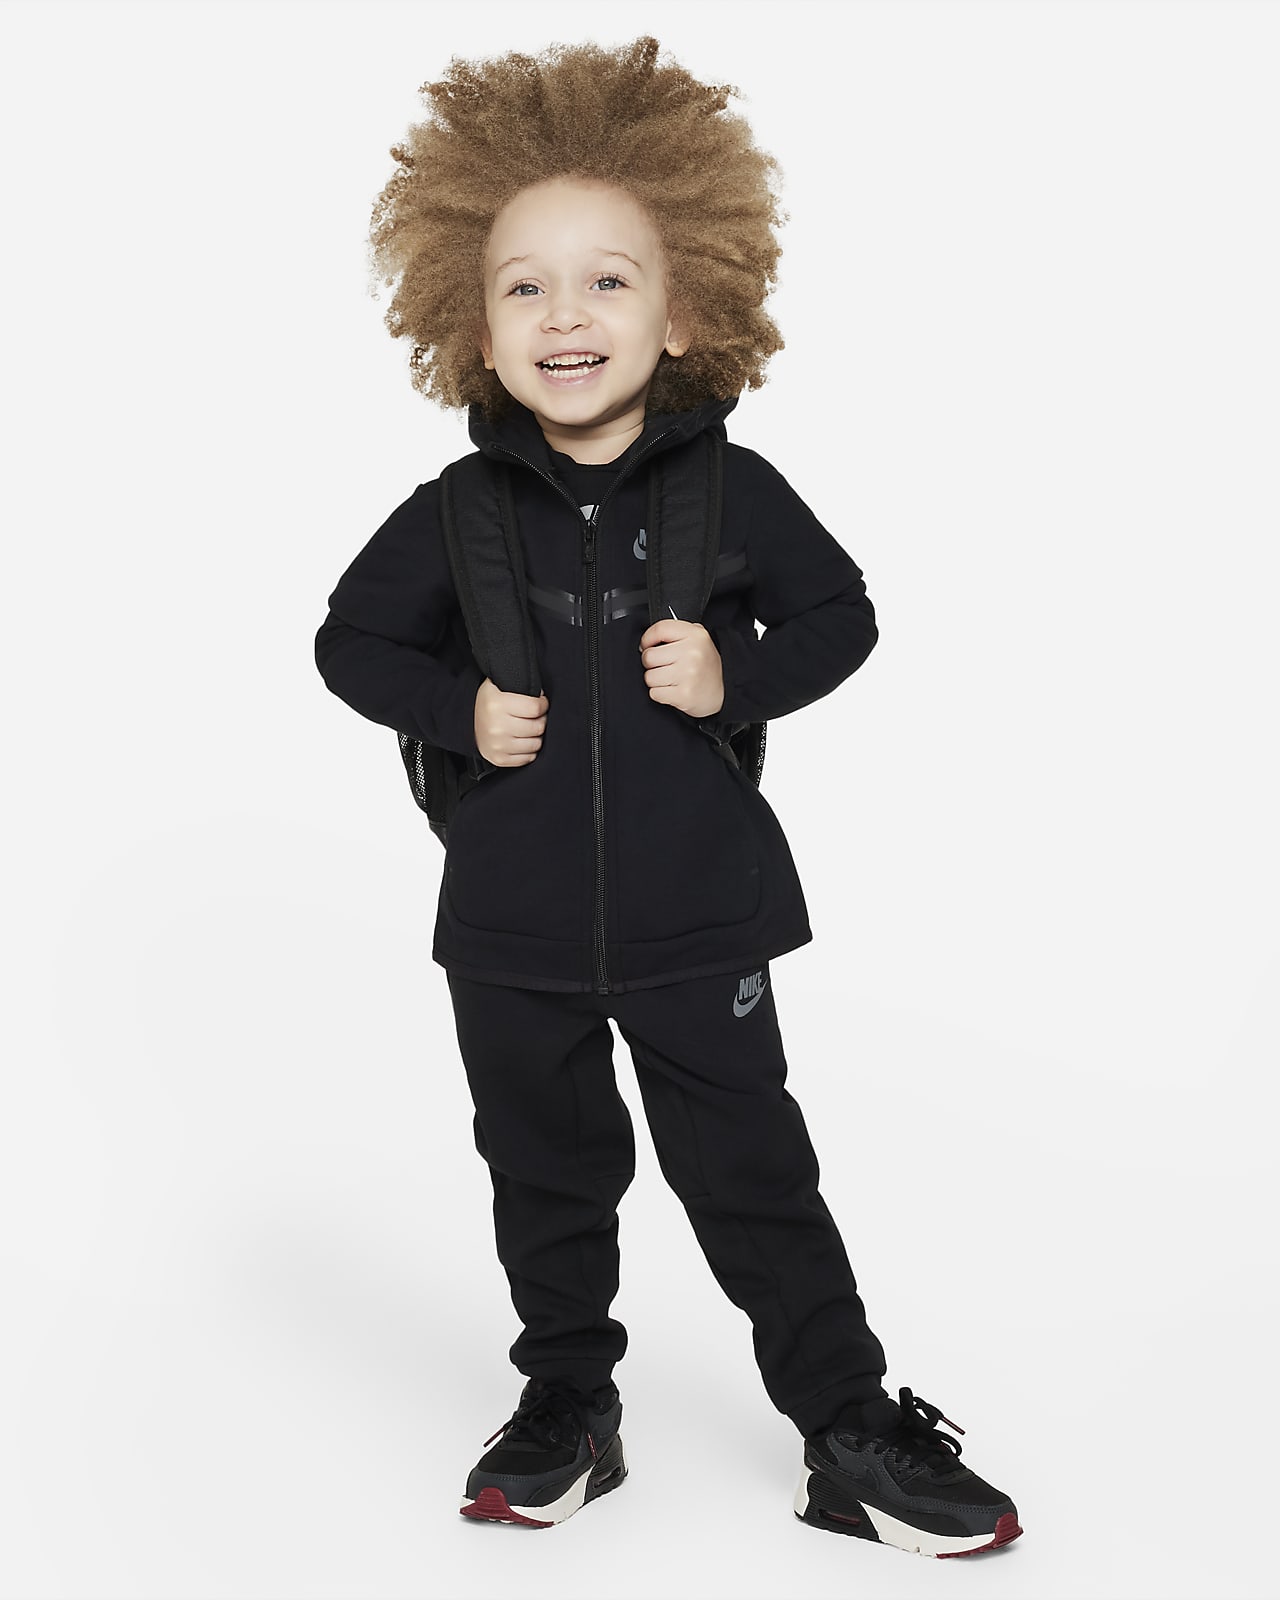 Nike Sportswear Tech Fleece Toddler Zip Hoodie and Pants Set